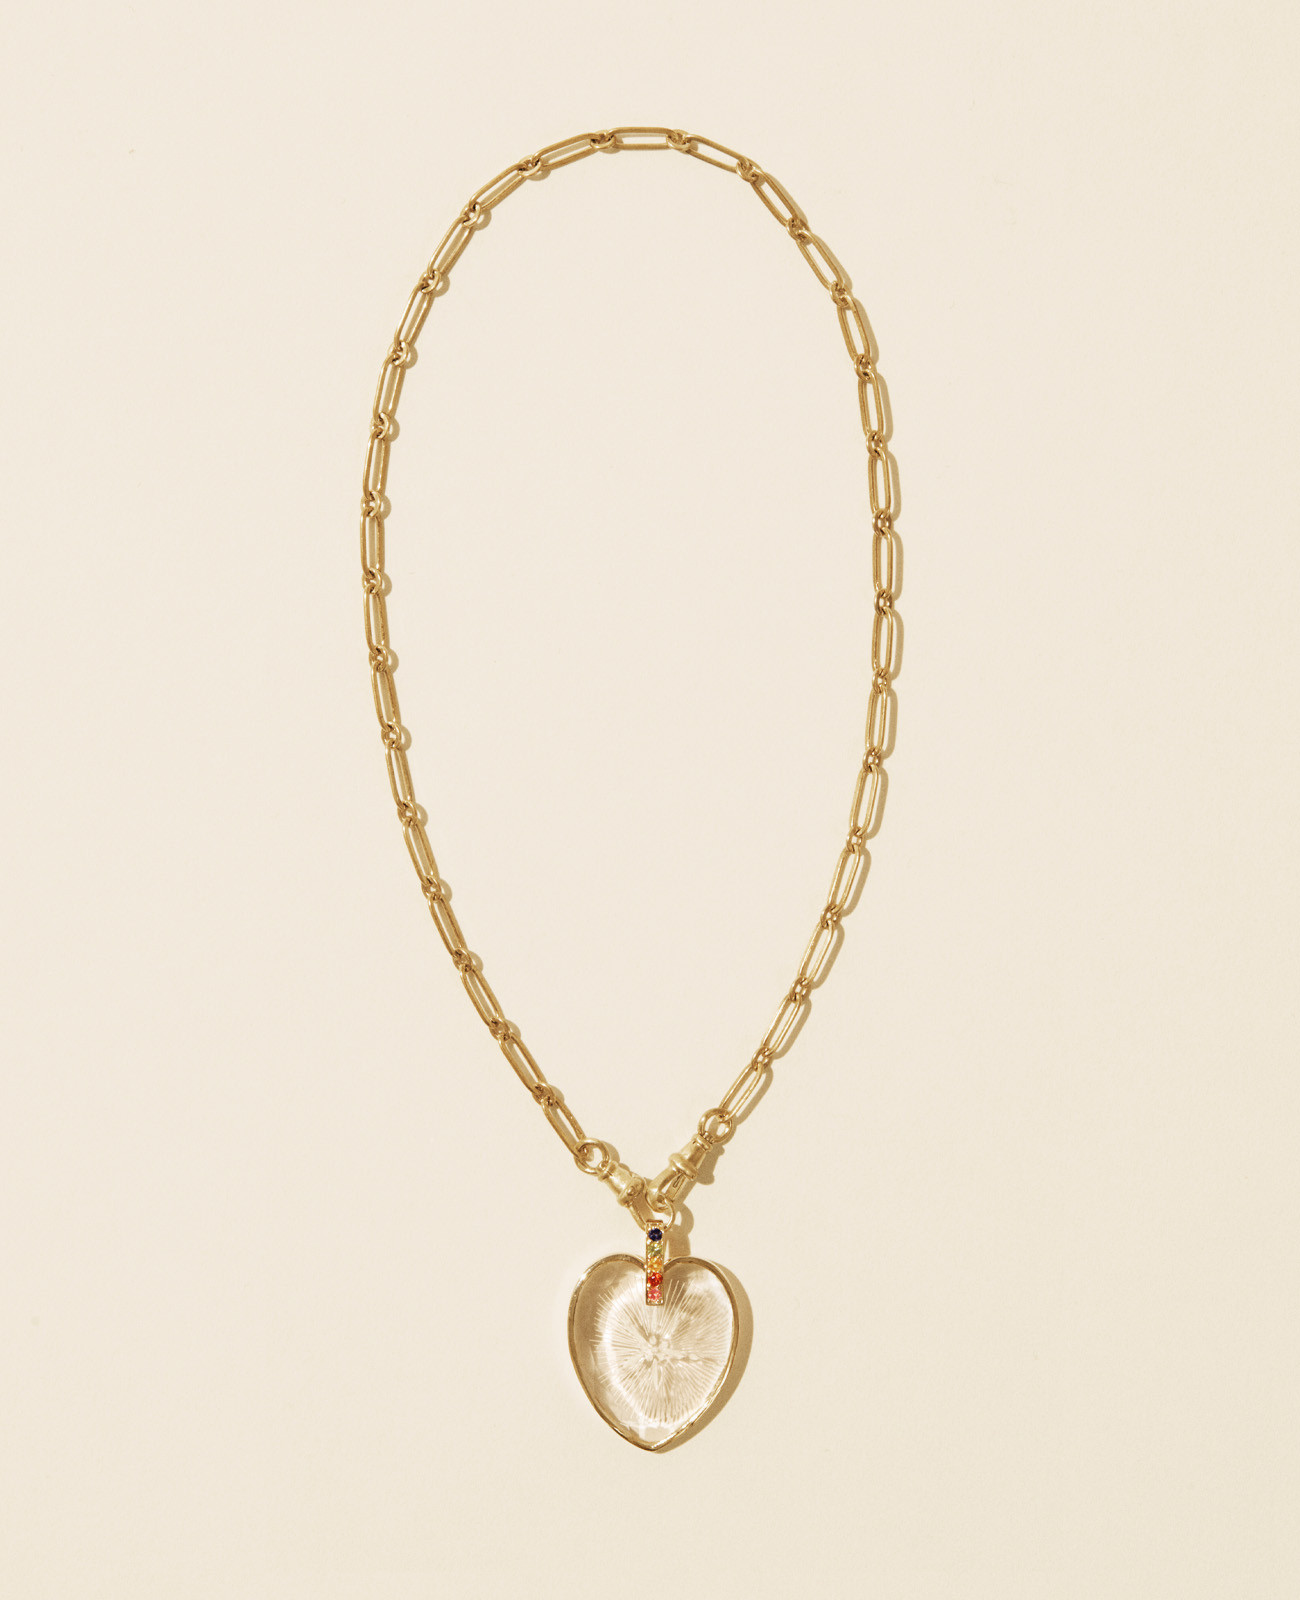 GABIN N°2 necklace pascale monvoisin jewelry paris